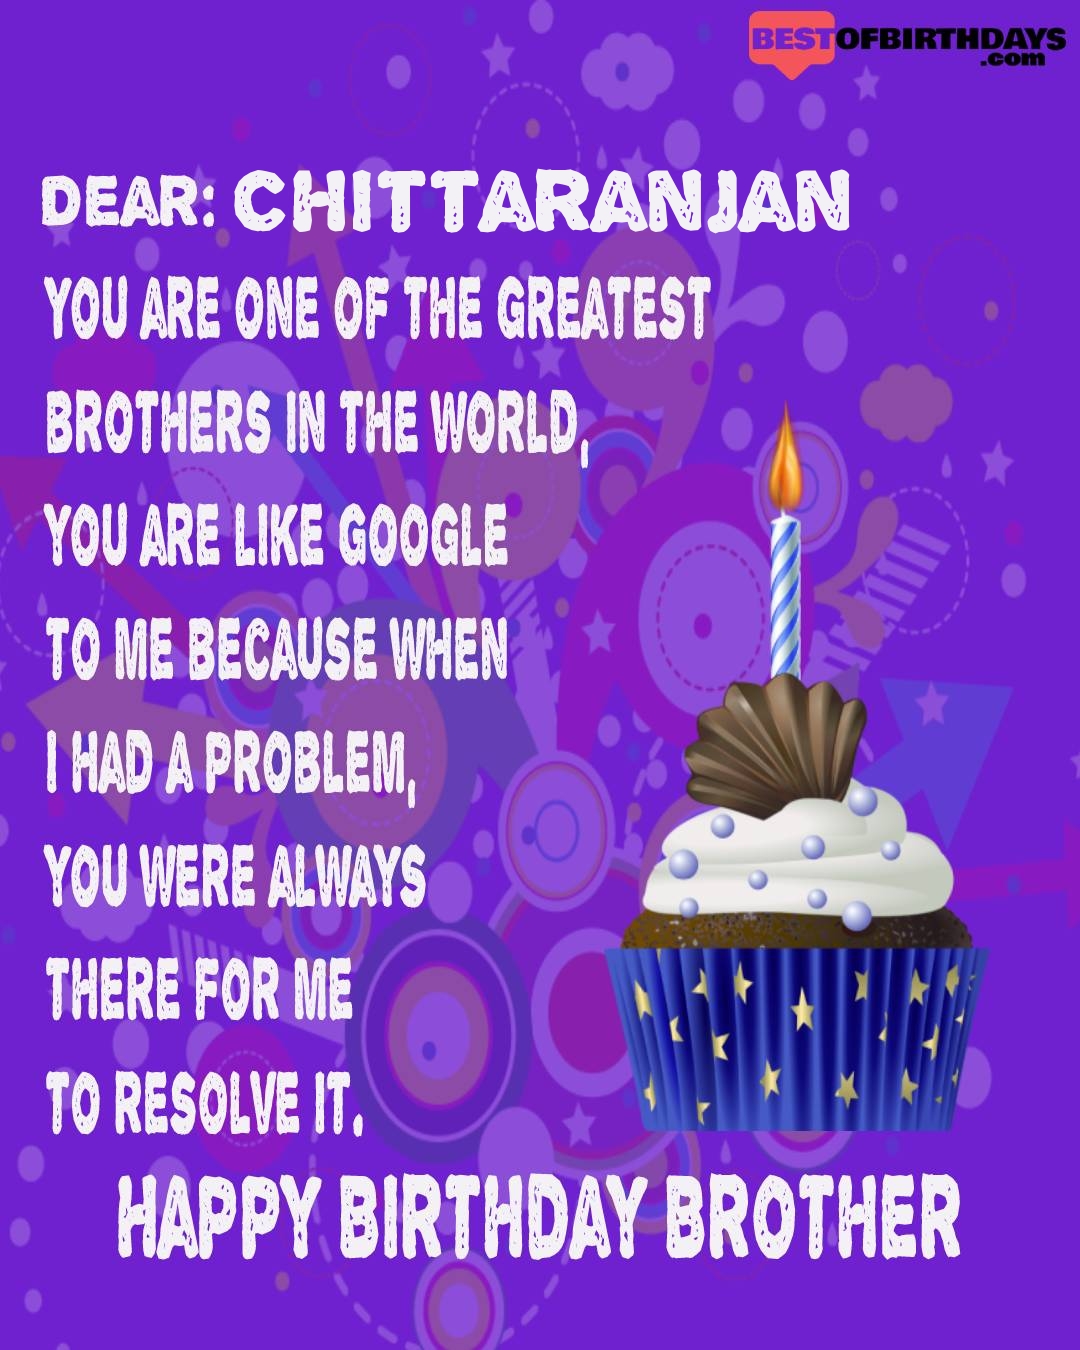 Happy birthday chittaranjan bhai brother bro